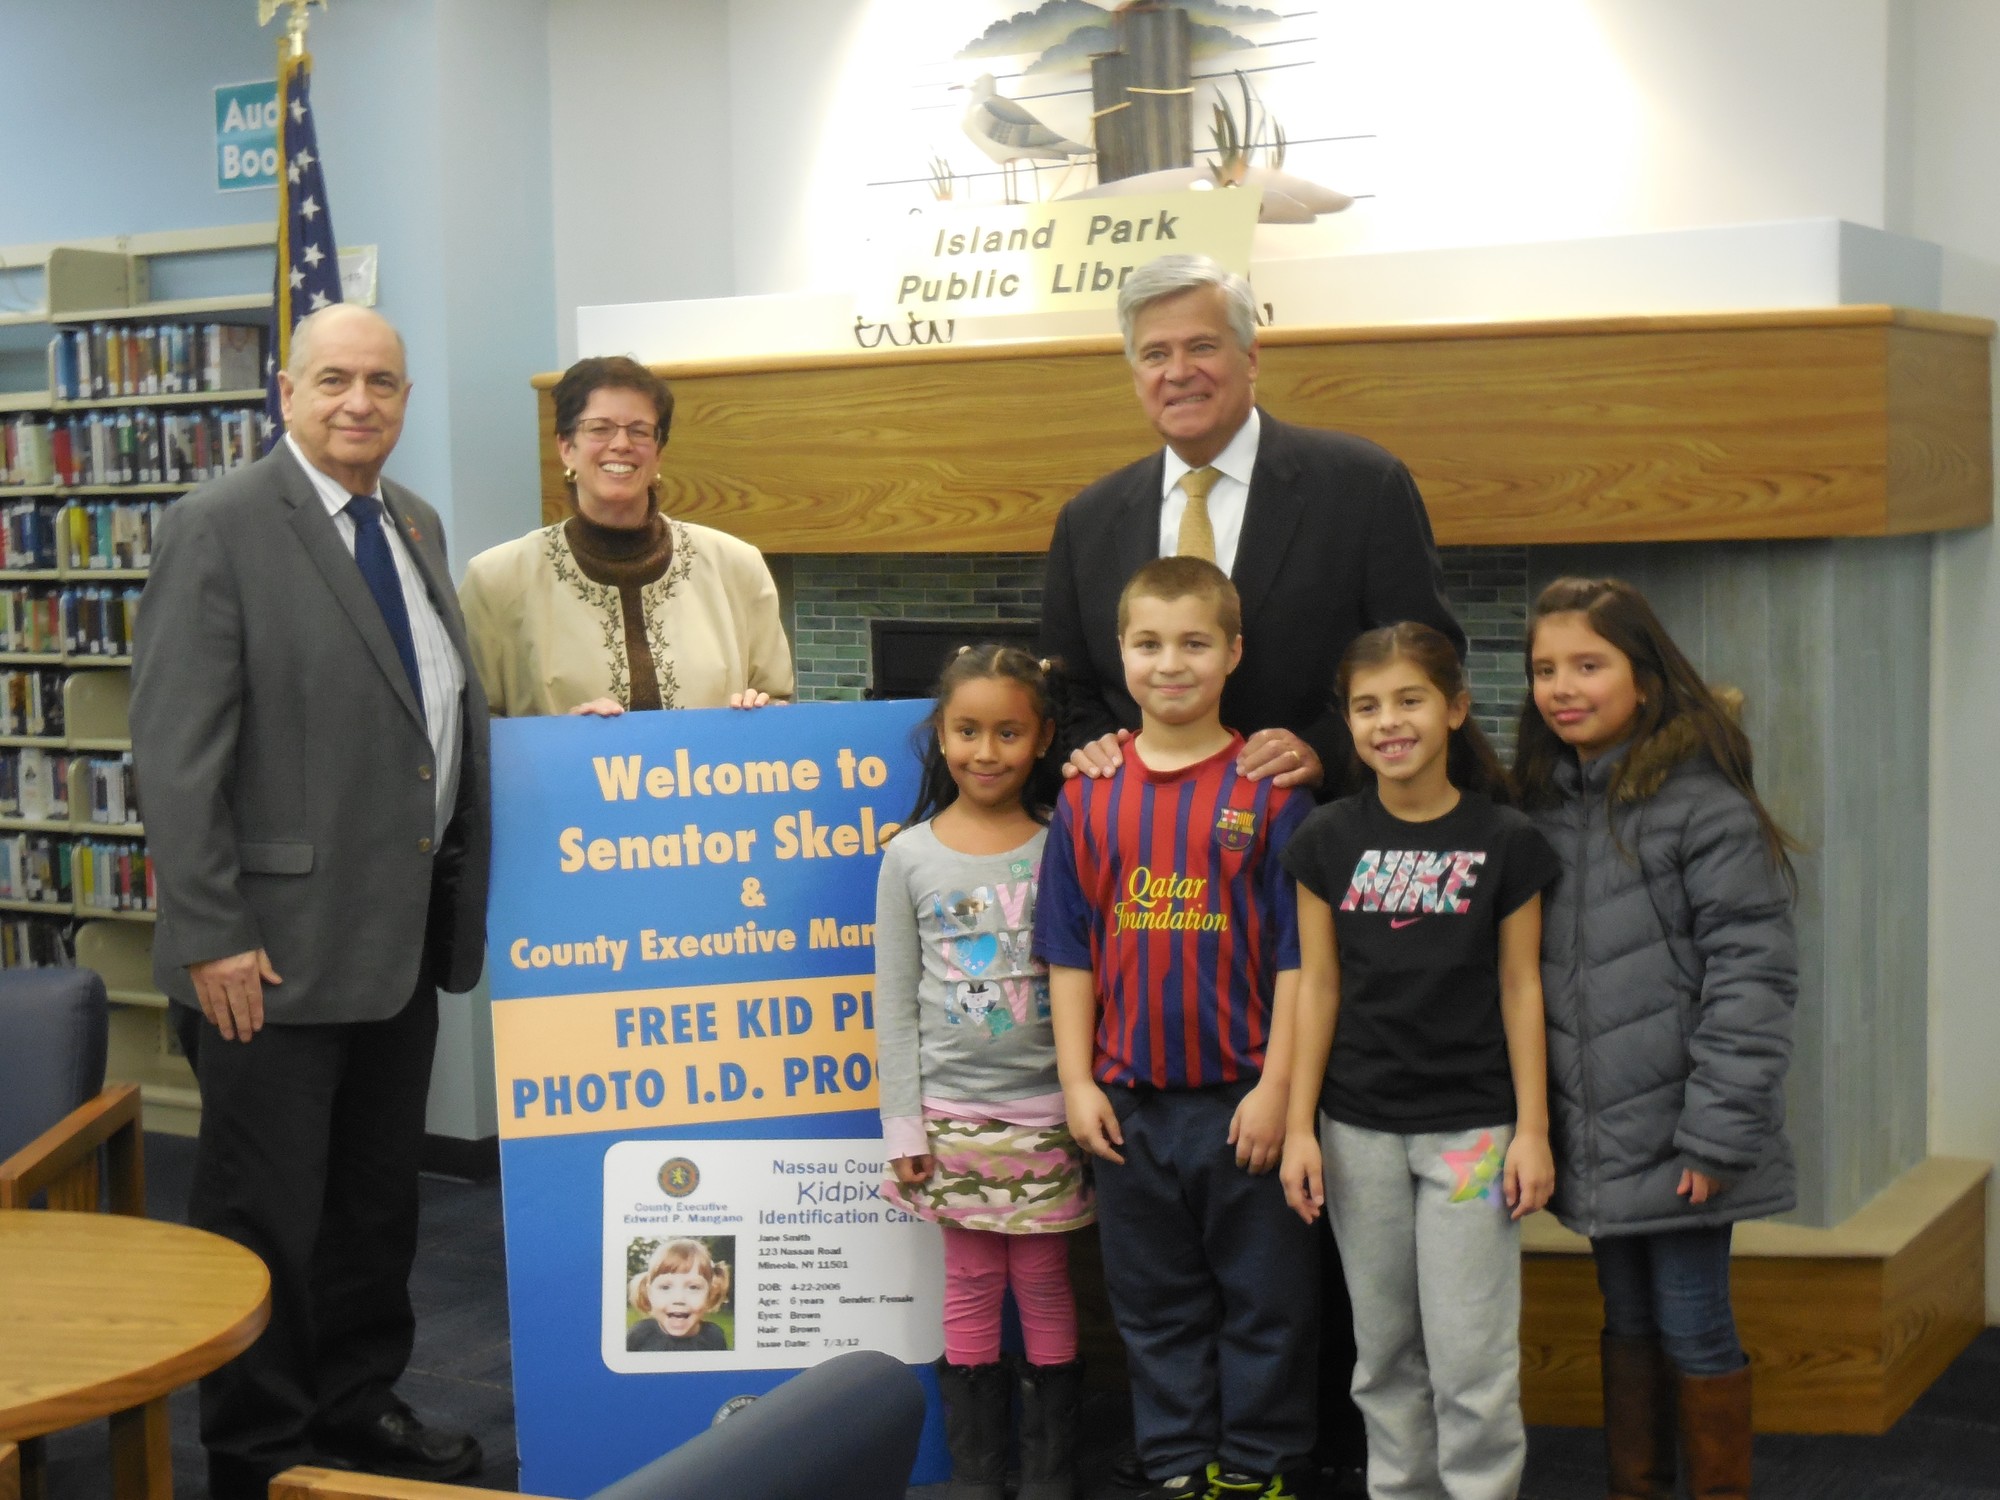 Island Park Library board member Joe Ponte, Library Director Jessica Koenig, and Senator Dean Skelos helped local children.